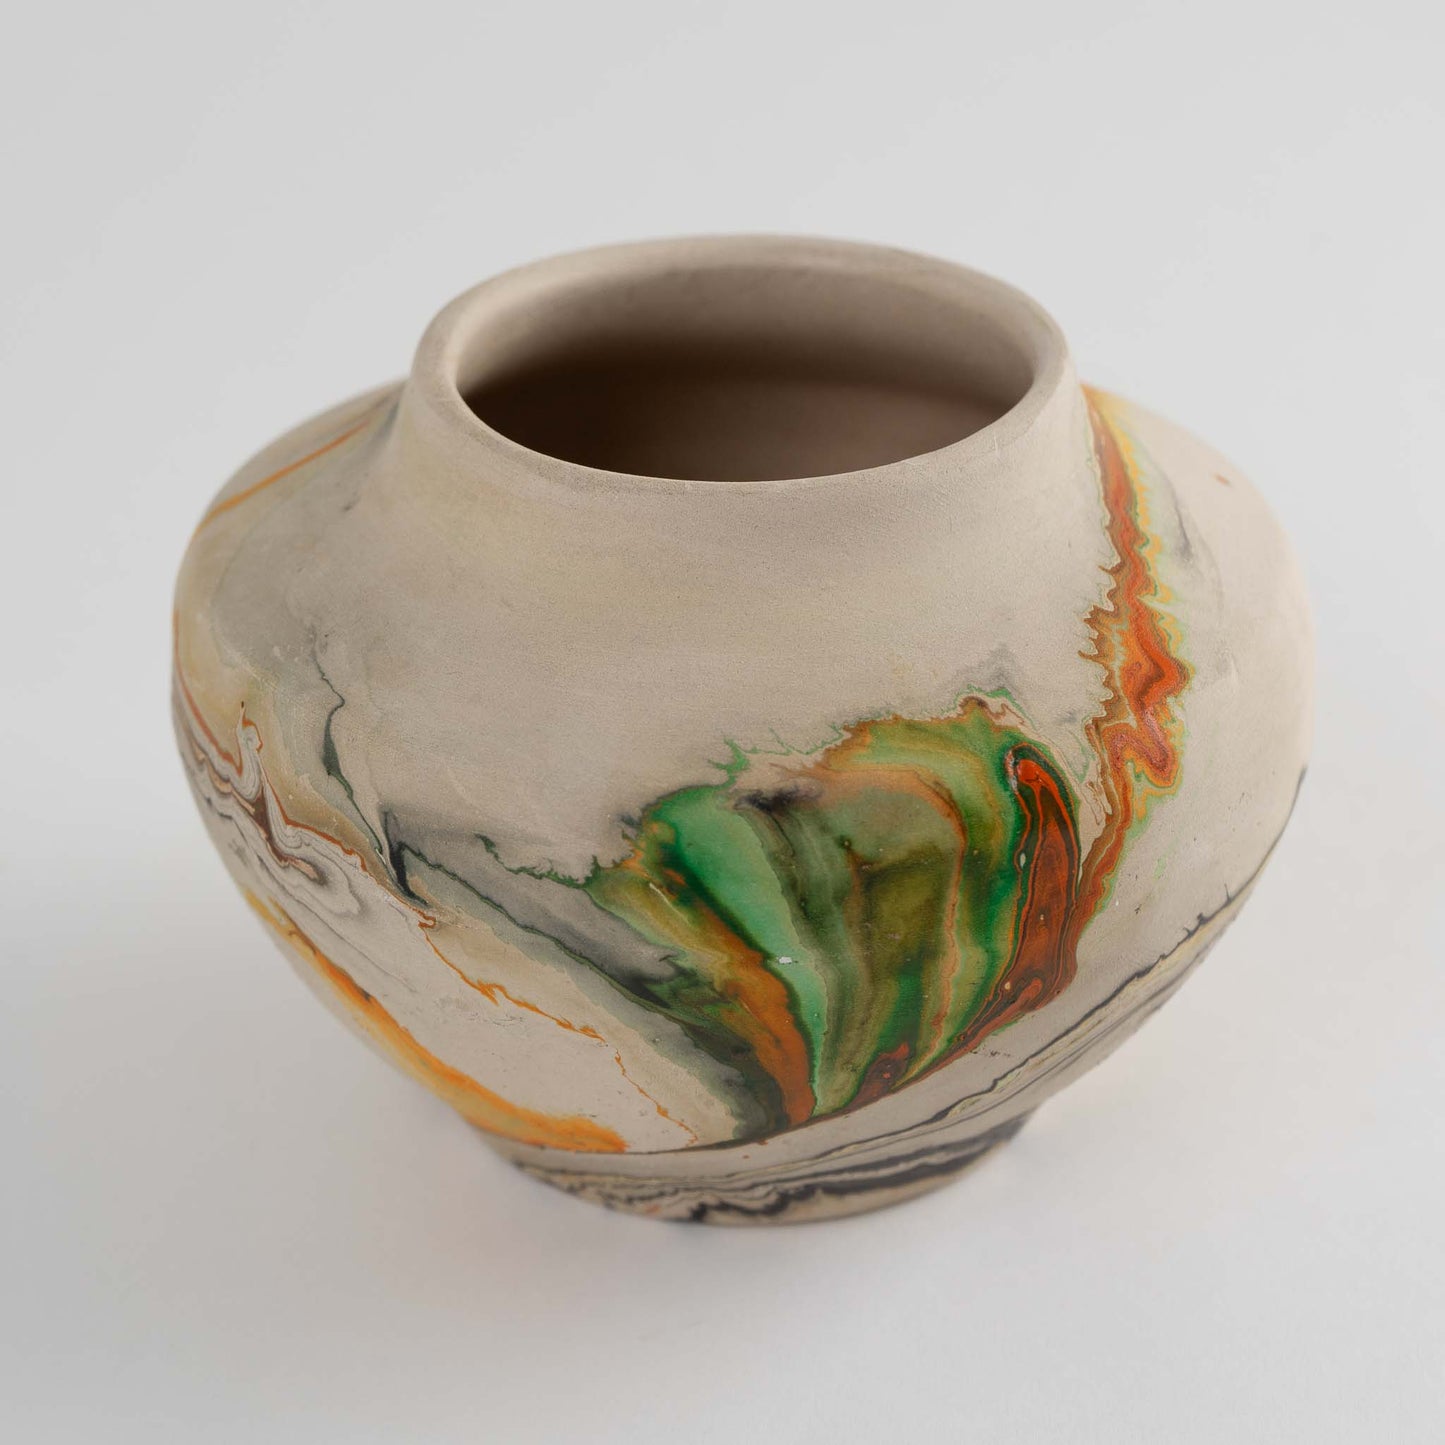 Vintage Nemadji Bisque Pottery Vase, Orange/Tan/Green Swirls